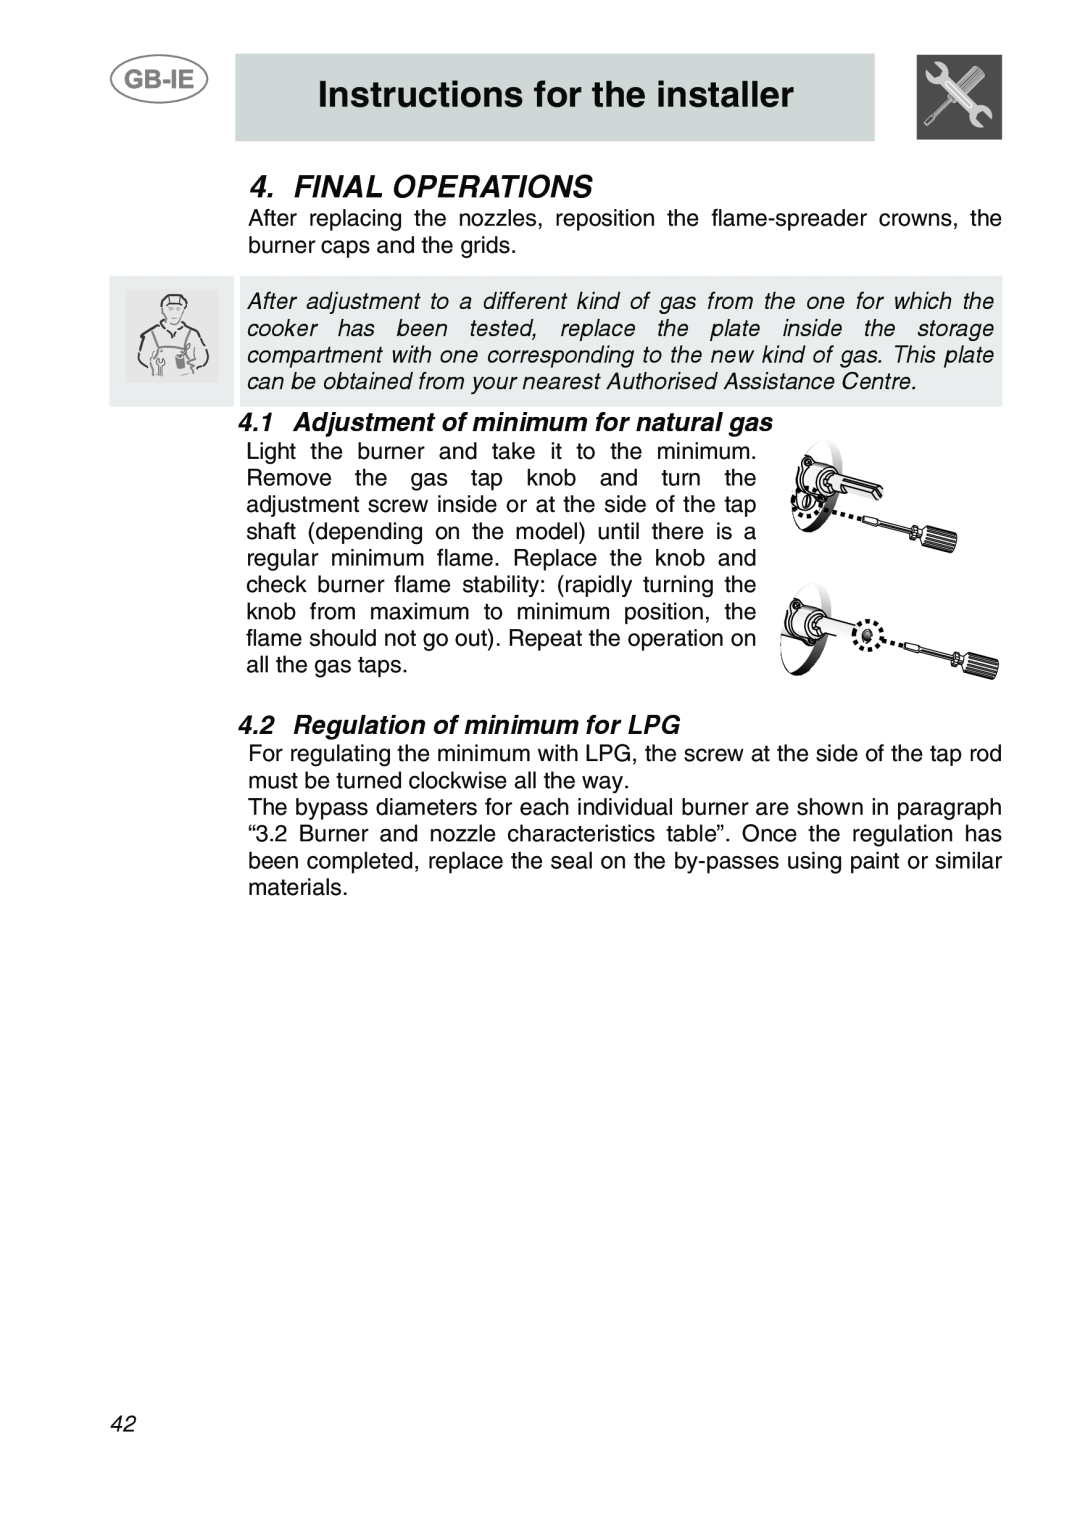 Smeg A1-6 manual Final Operations, Adjustment of minimum for natural gas, Regulation of minimum for LPG 